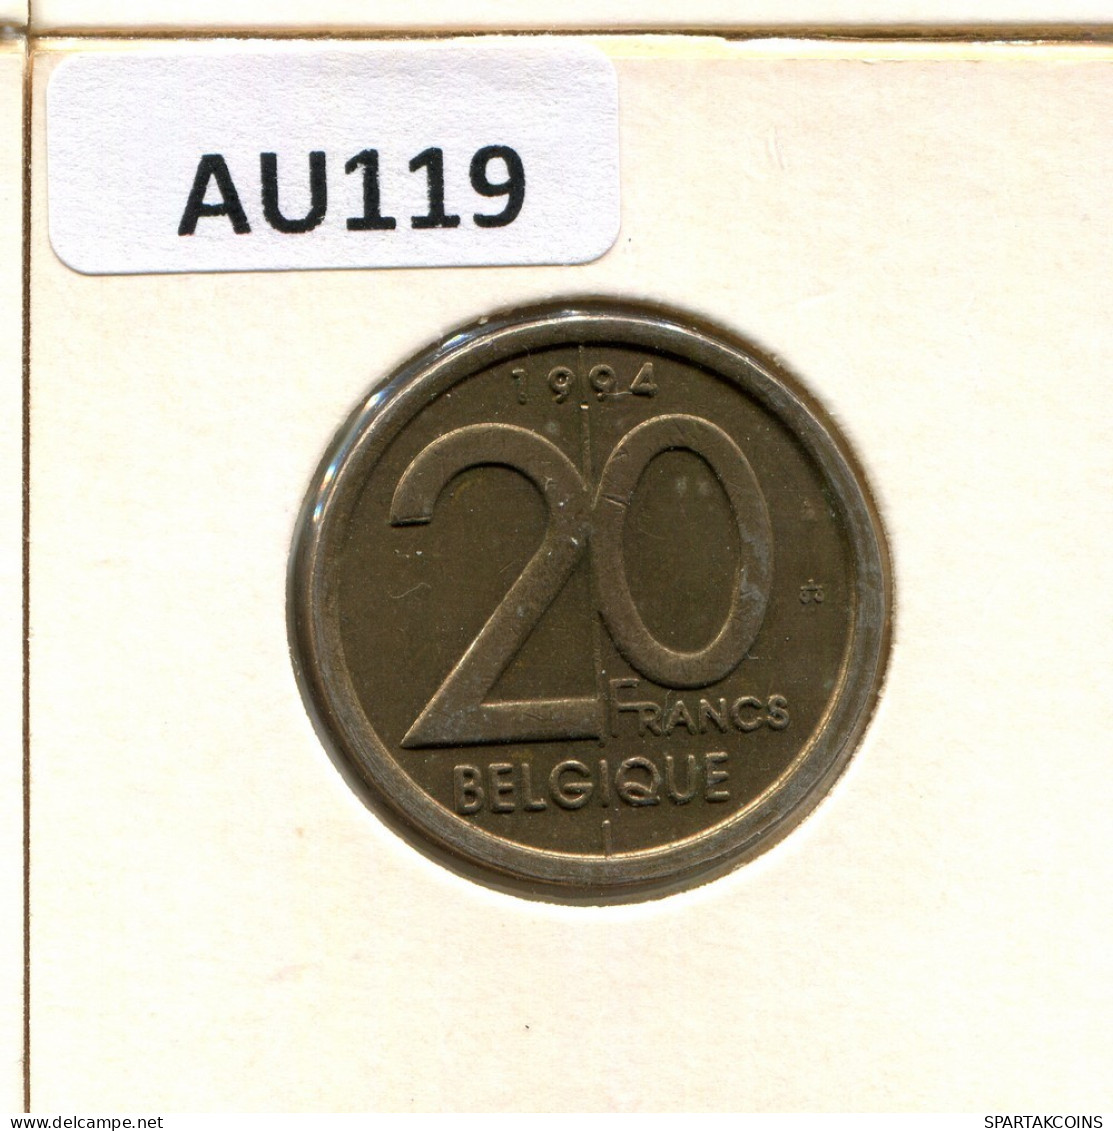 20 FRANCS 1994 Französisch Text BELGIEN BELGIUM Münze #AU119.D.A - 20 Frank